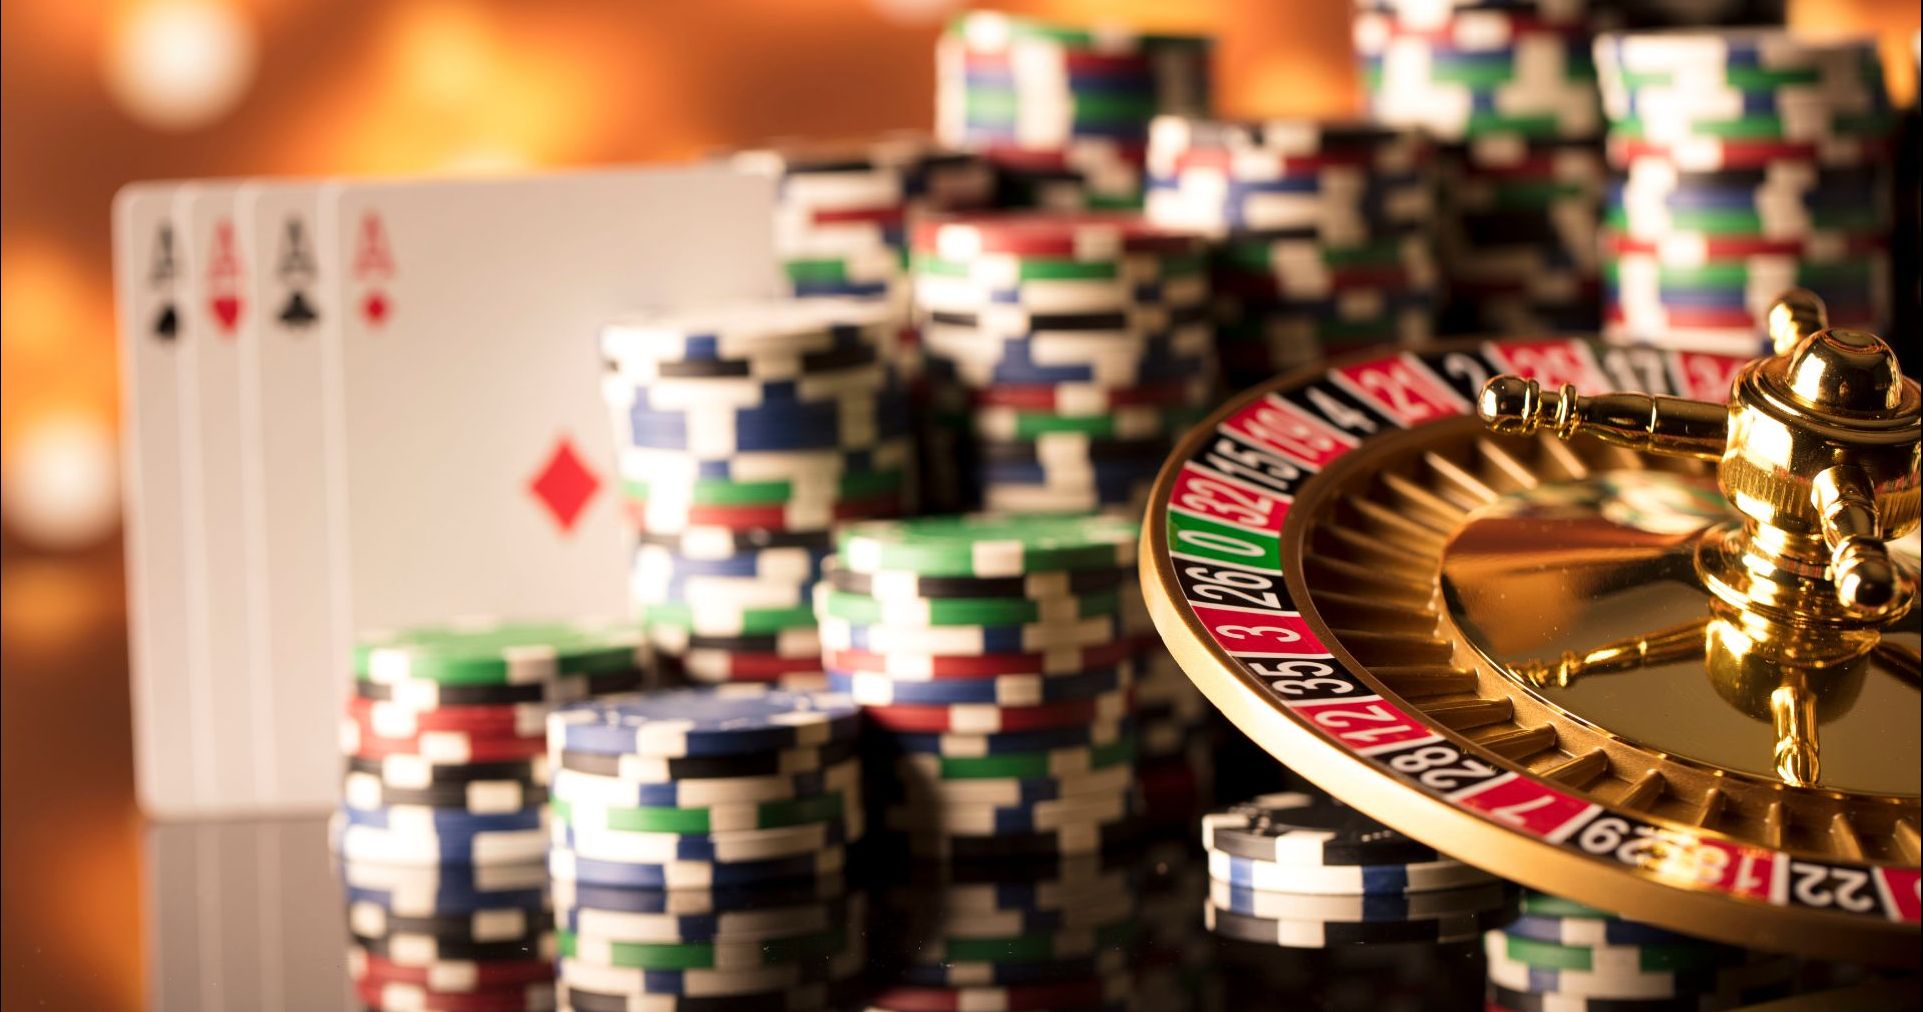 How Casino Bonuses Work